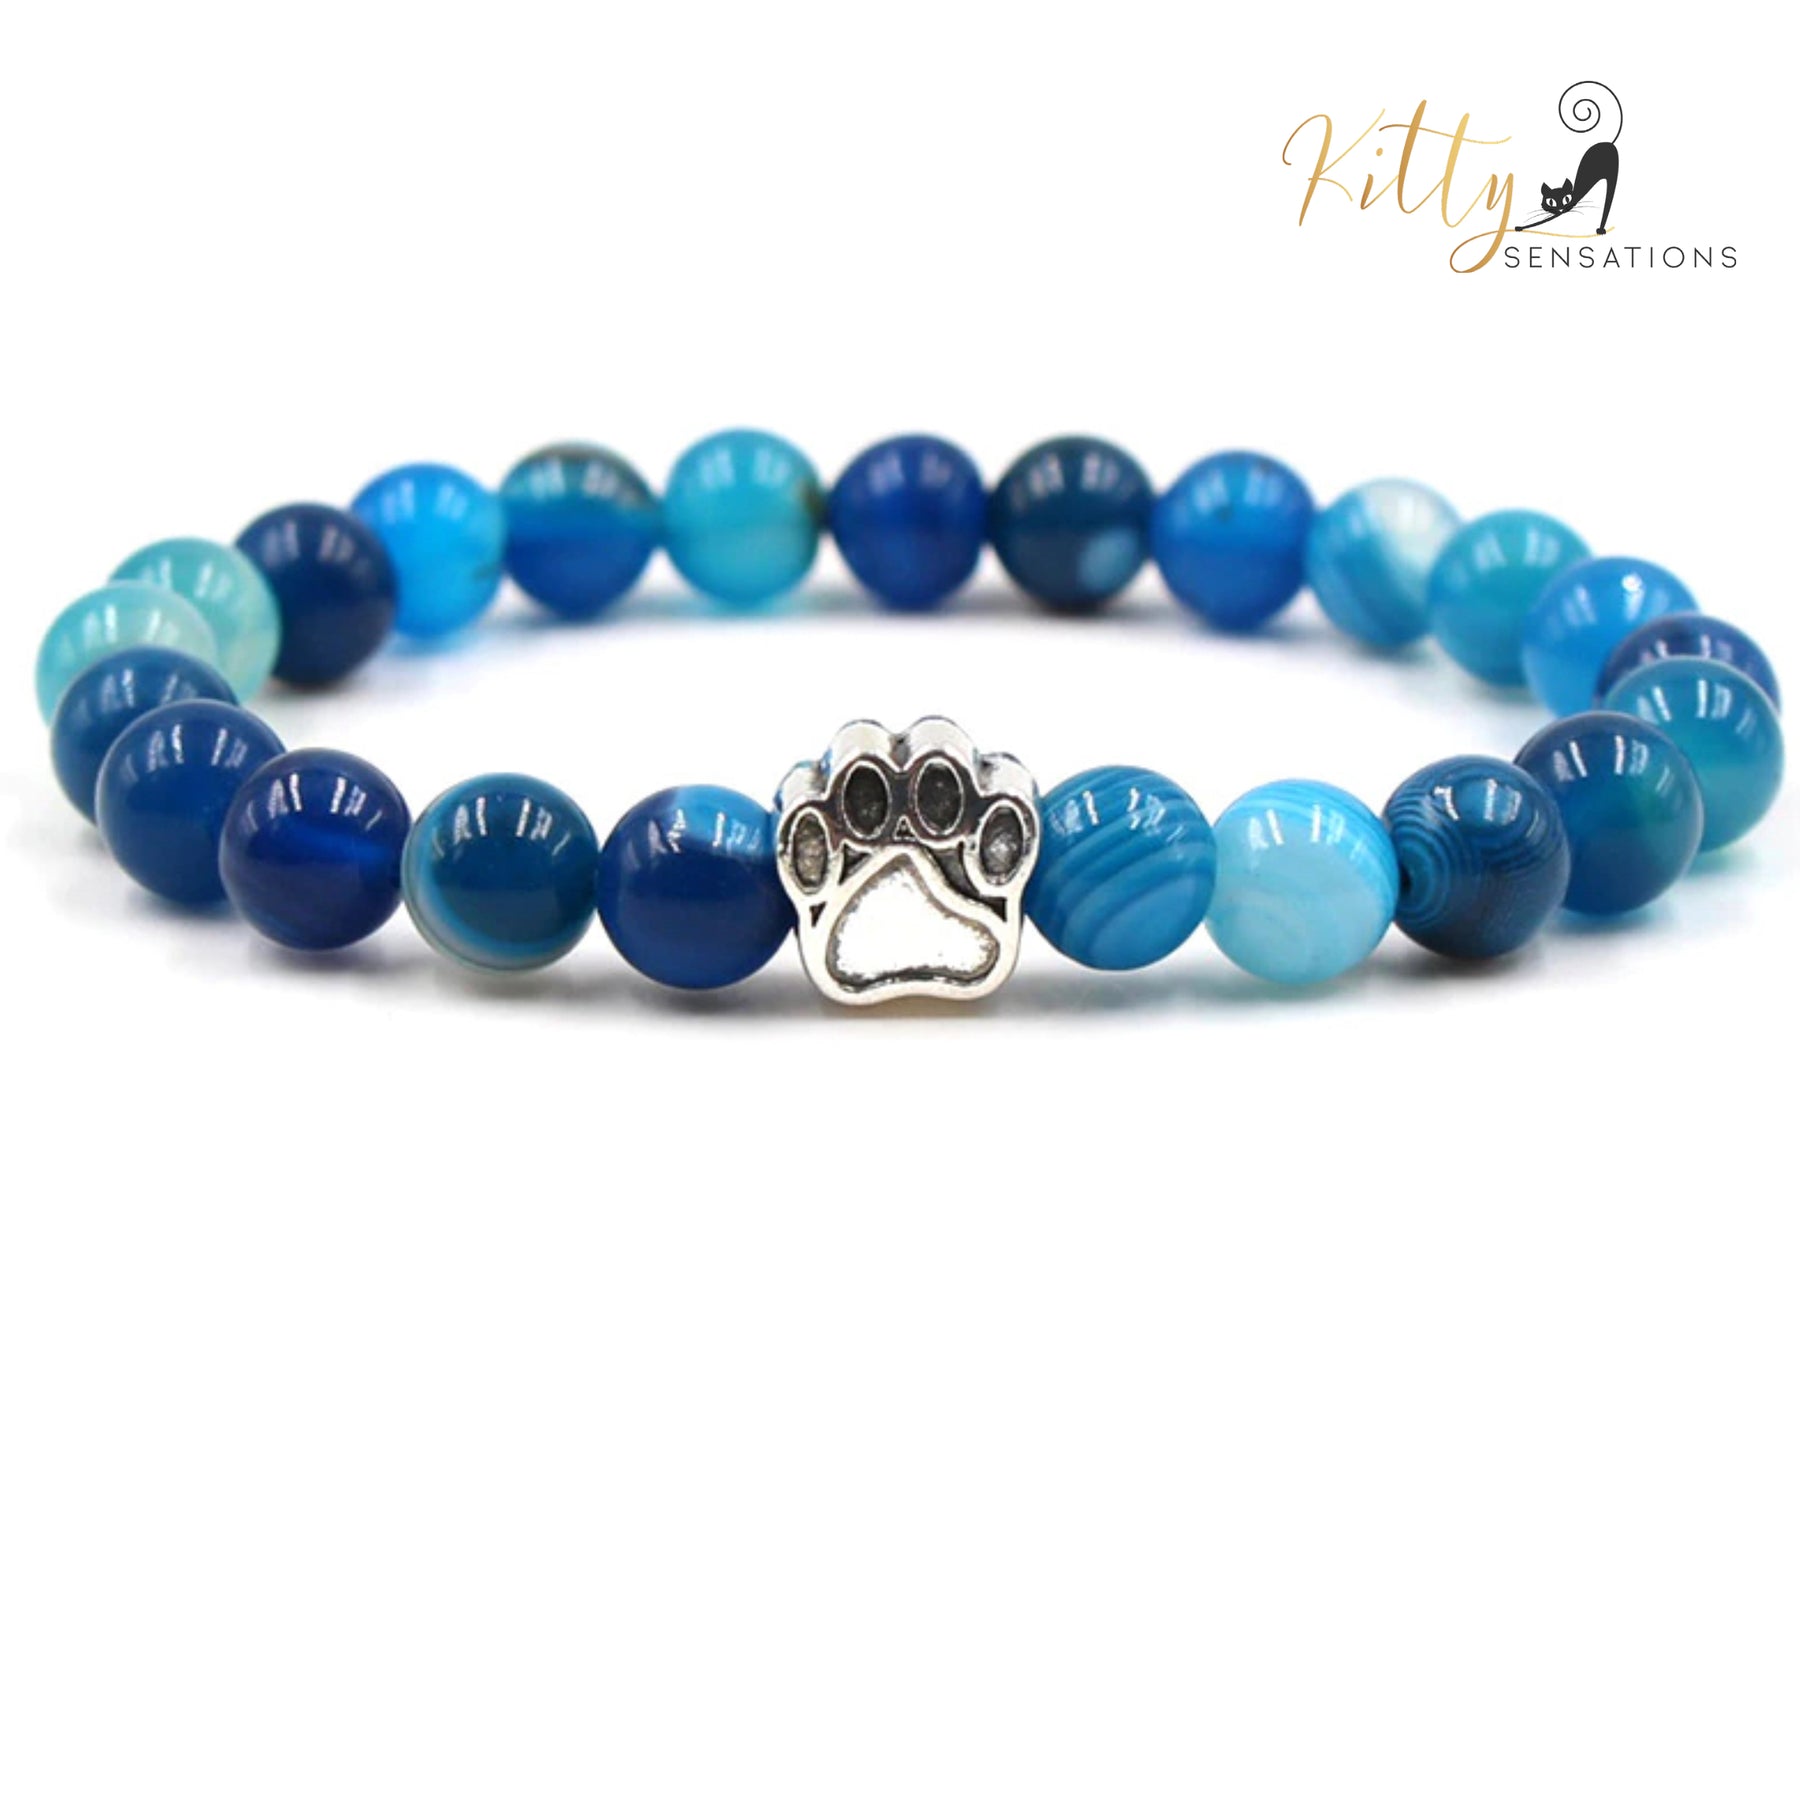 http://KittySensations.com Natural Gemstones Kitty/Cat Paw Bracelet (7 Gemstone Options) ($28.90): https://kittysensations.com/products/natural-semi-precious-stone-beads-kitty-cat-paw-bracelet-multiple-color-options